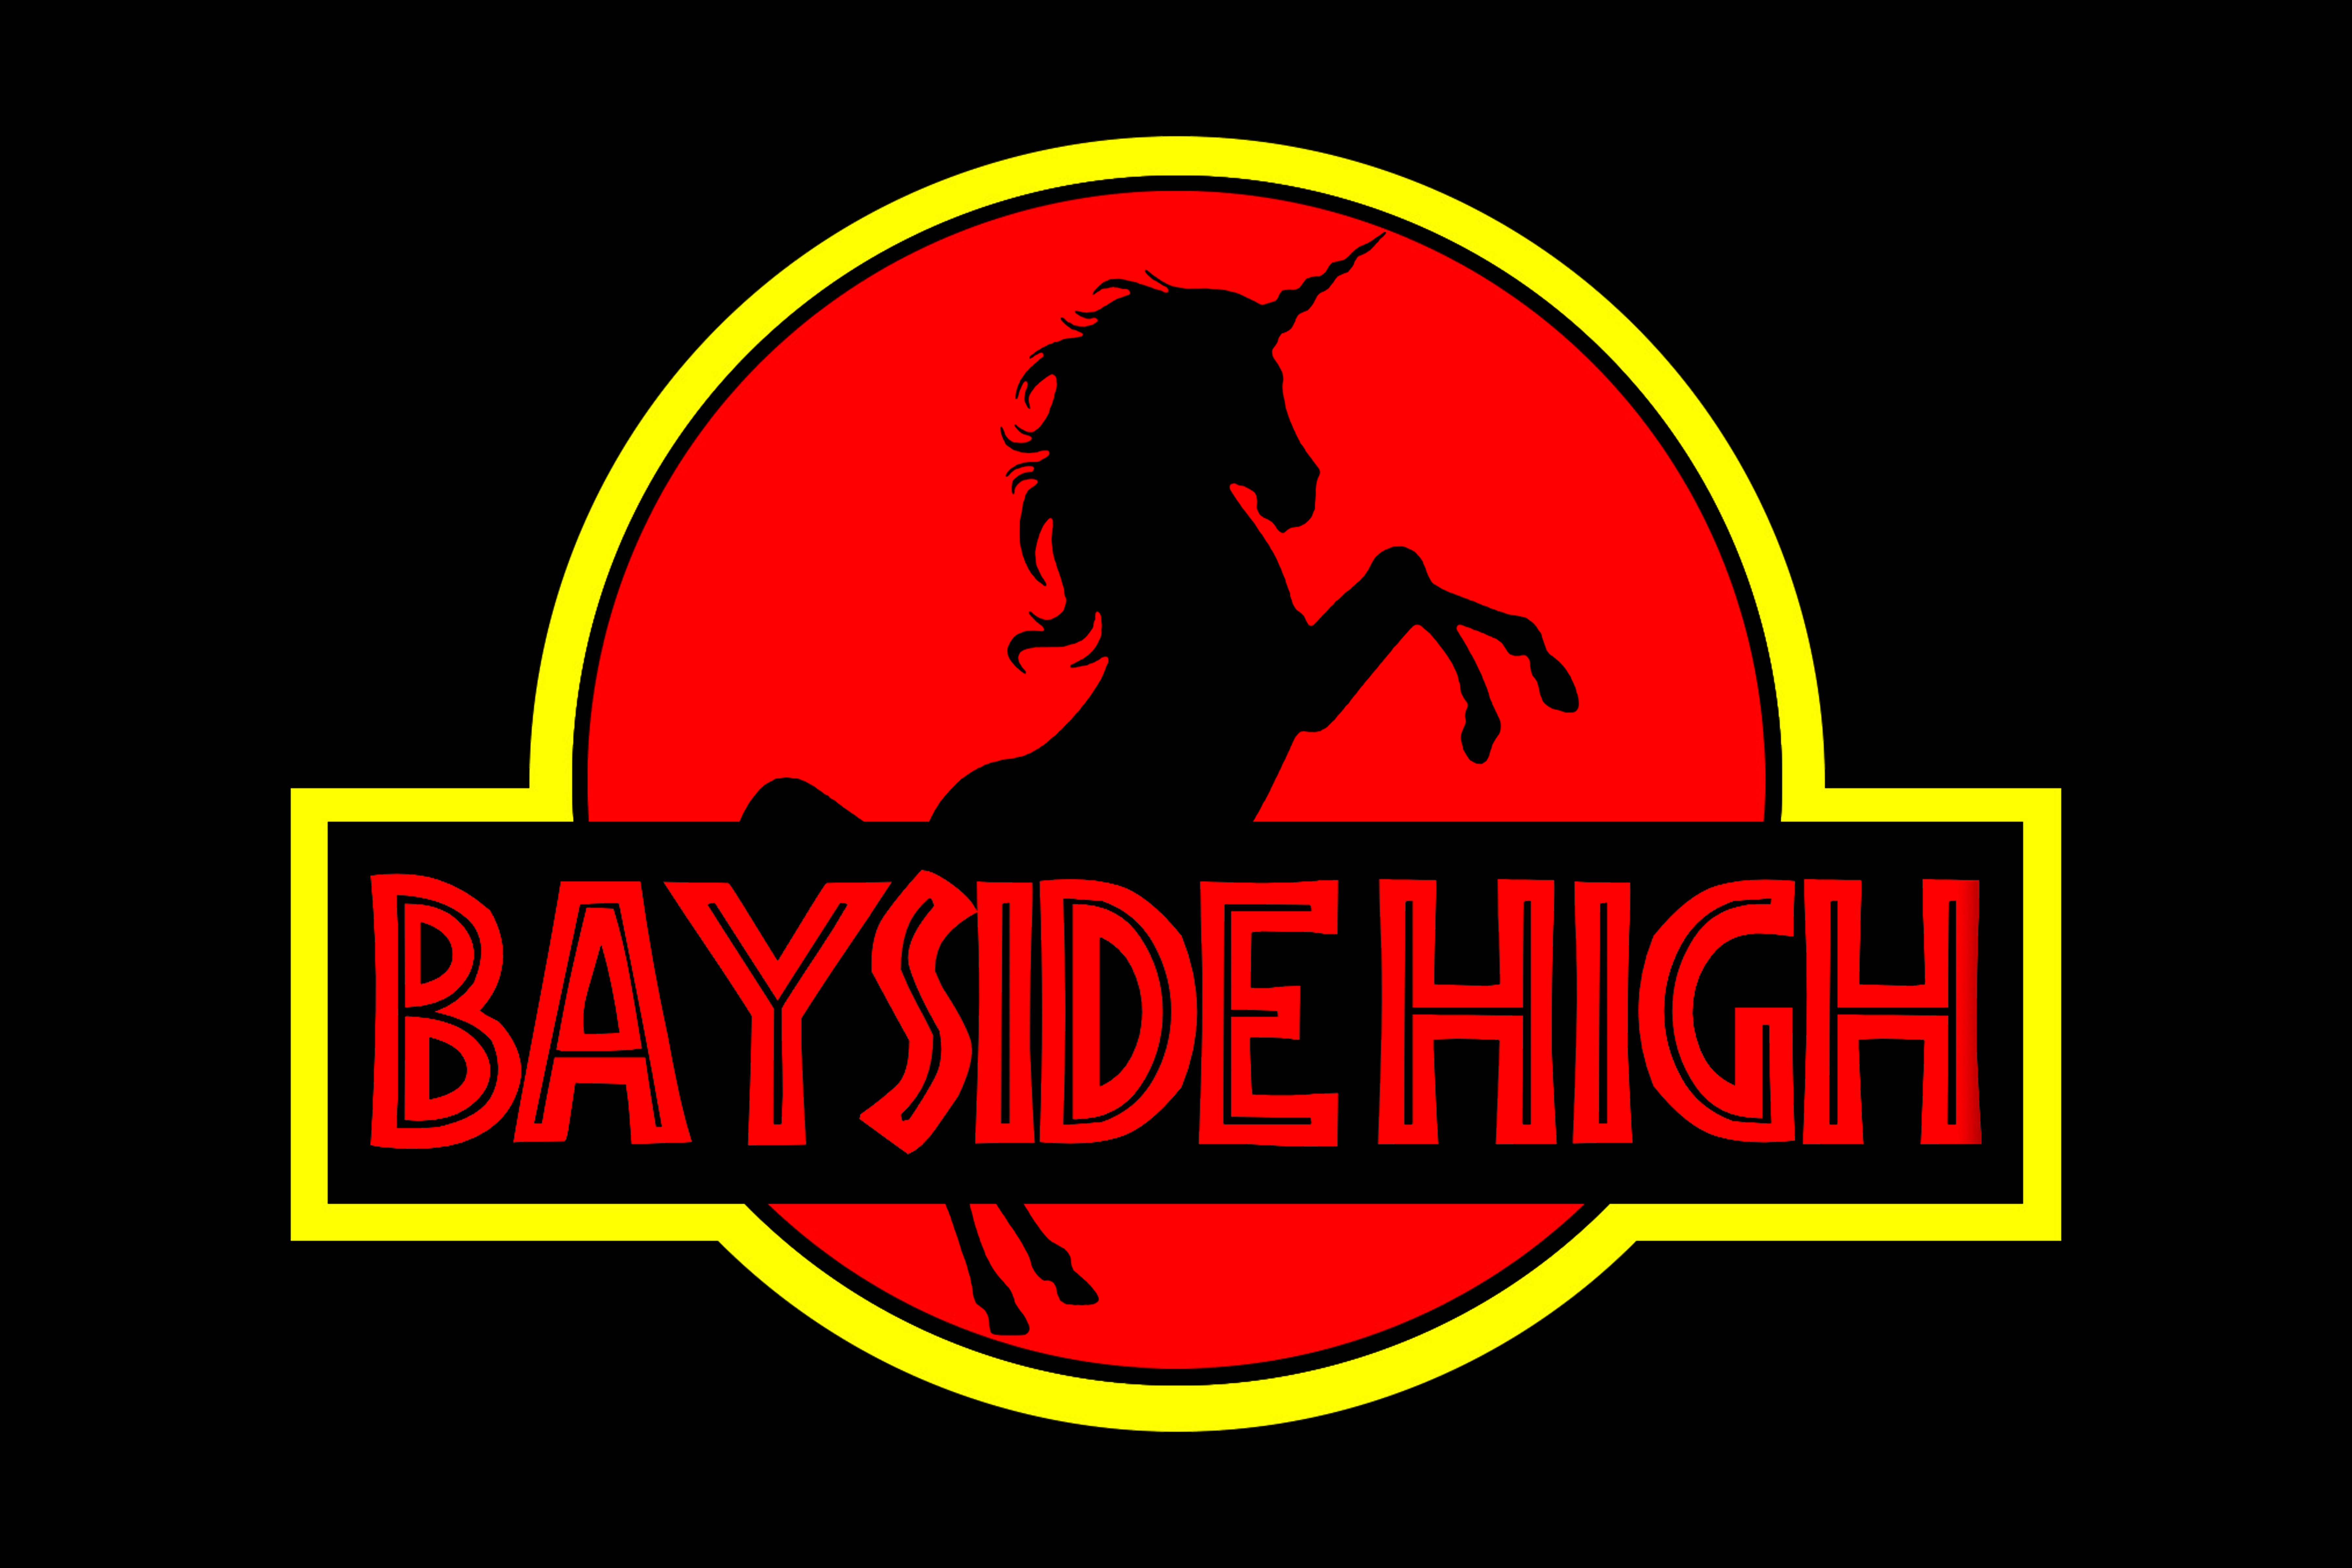 Bayside High